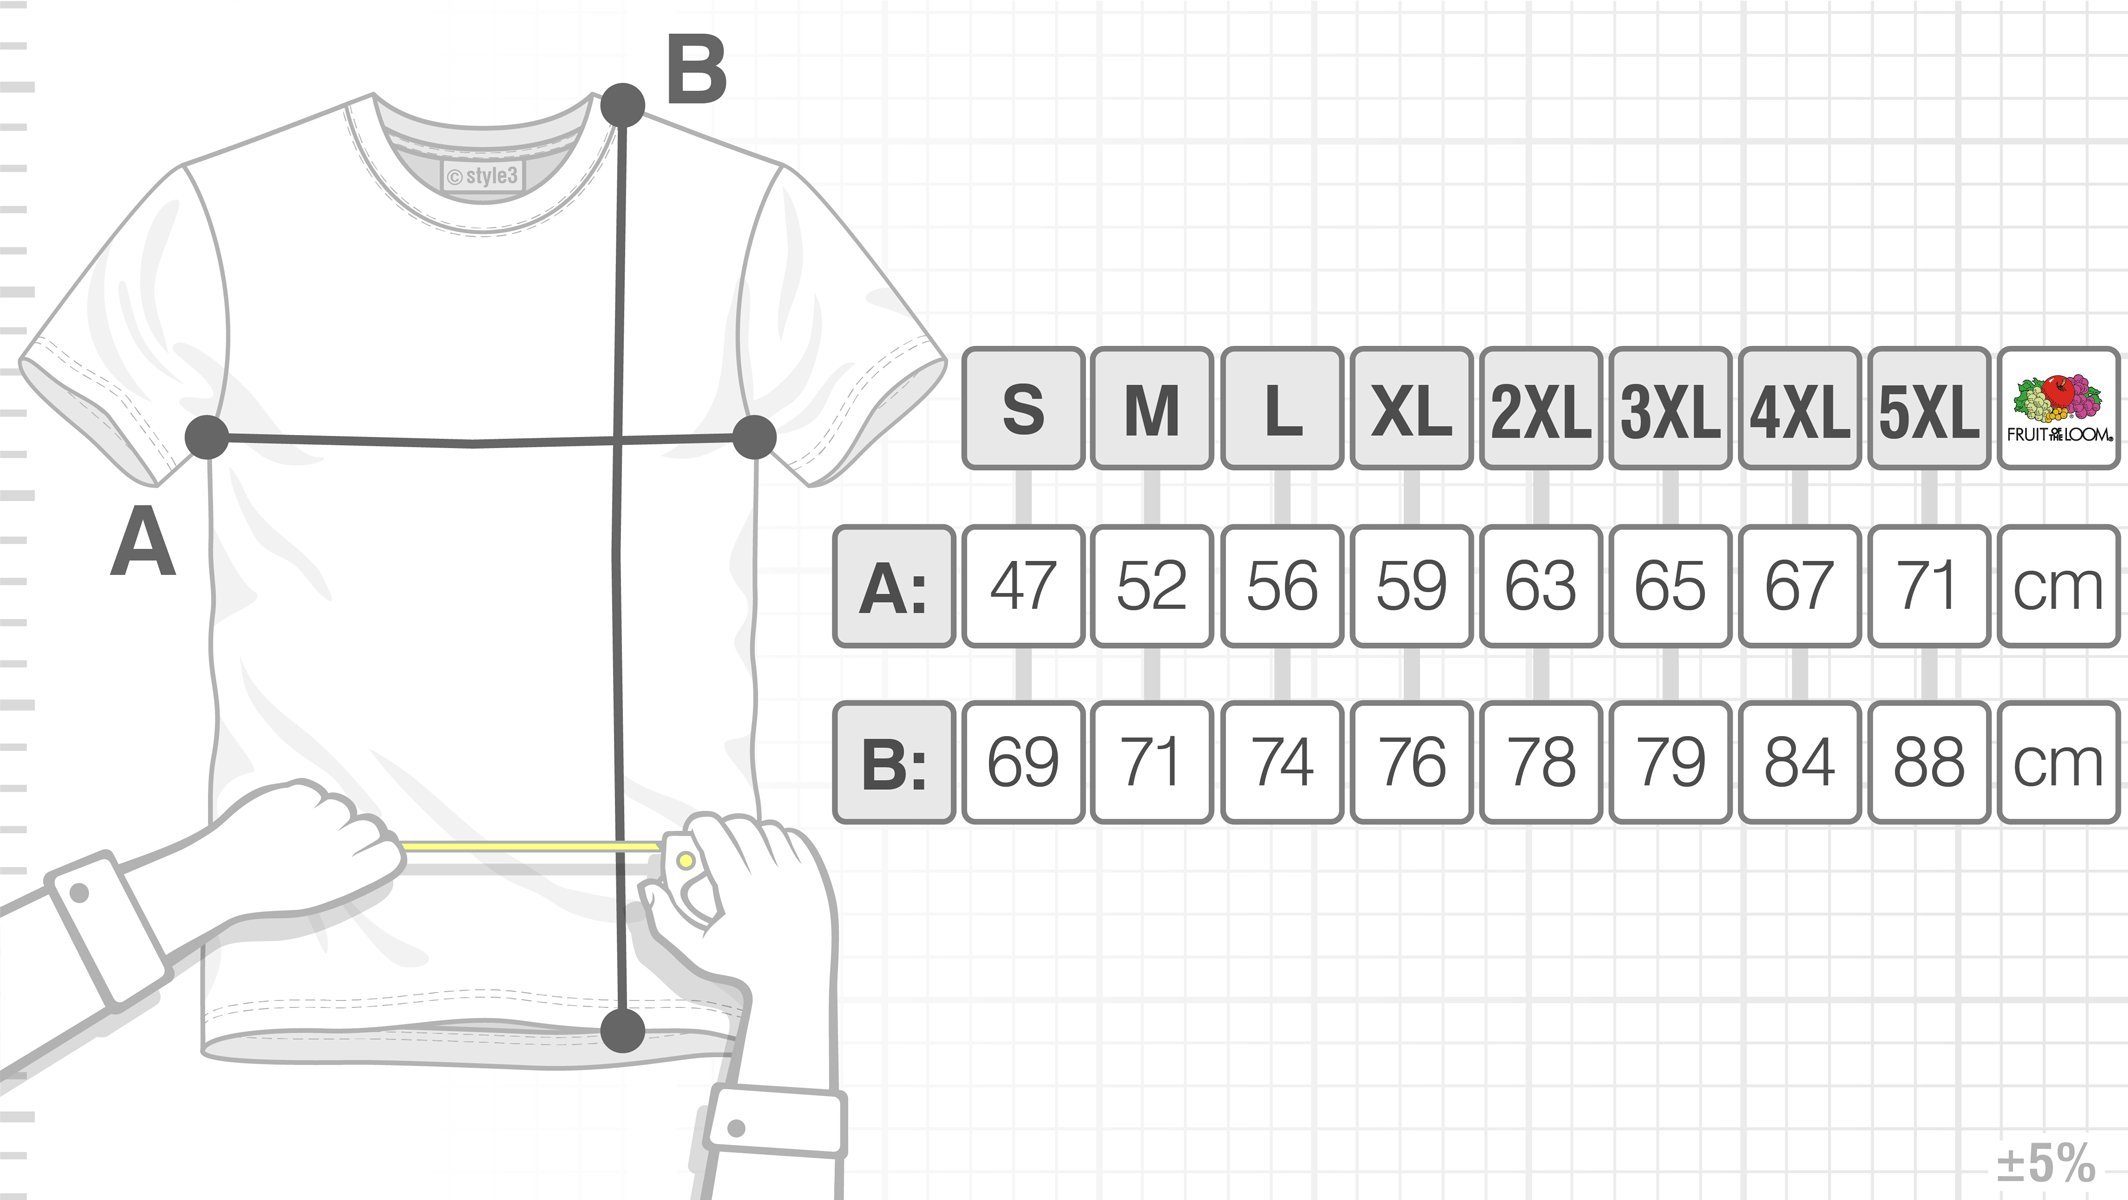 Theory Wesley Sheldon Serie Crusher Print-Shirt Bowling gelb style3 Pin T-Shirt Big Herren Cooper Bang